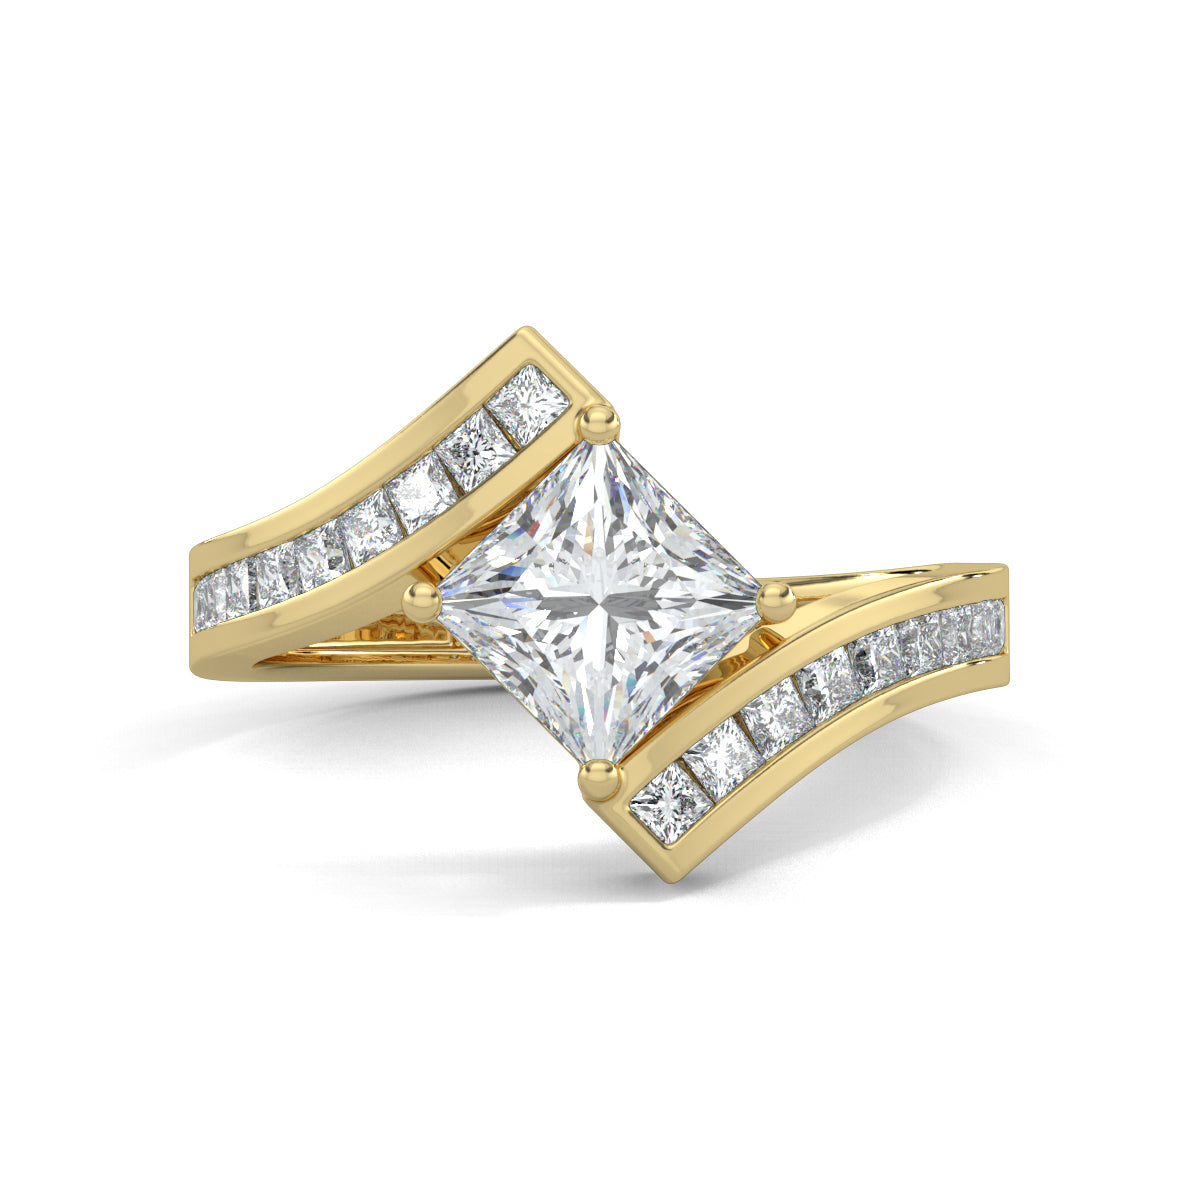 Yellow Gold, Diamond Ring, princess solitaire ring, princess-cut diamond, Natural diamonds, lab-grown diamonds, solitaire engagement ring, ethical jewelry, timeless elegance, regal design, luxury ring